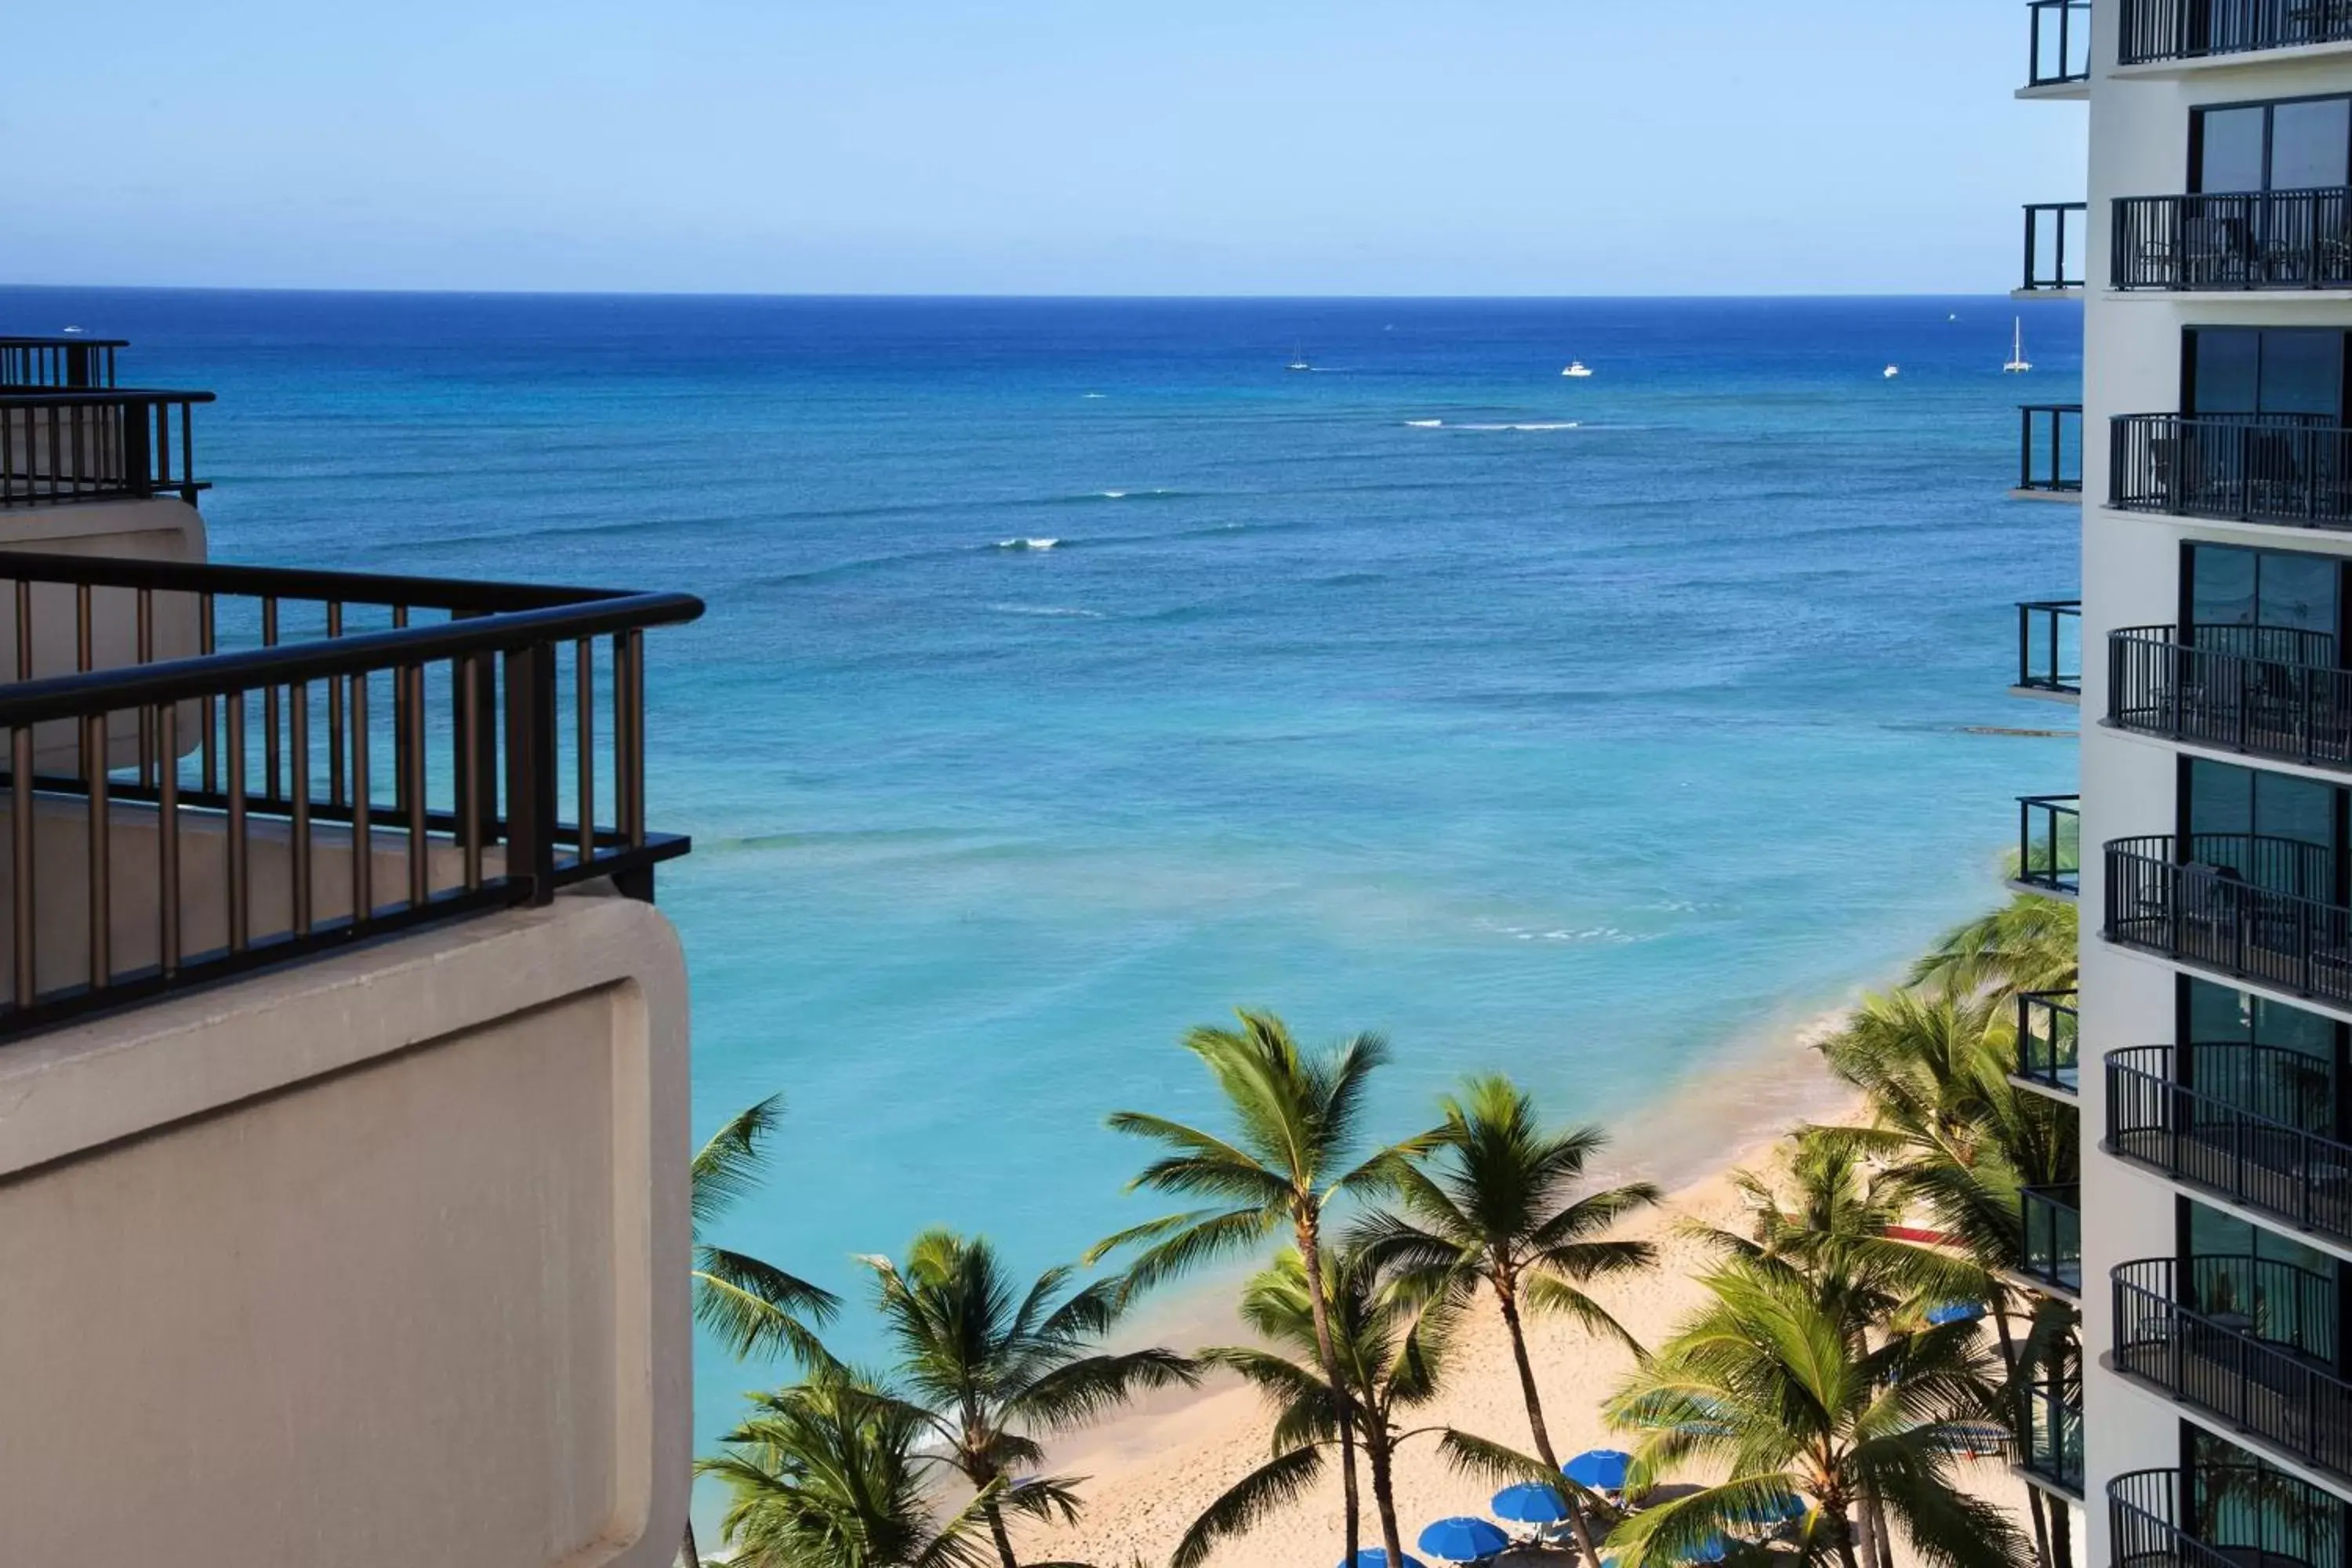 Photo of the whole room, Sea View in Moana Surfrider, A Westin Resort & Spa, Waikiki Beach